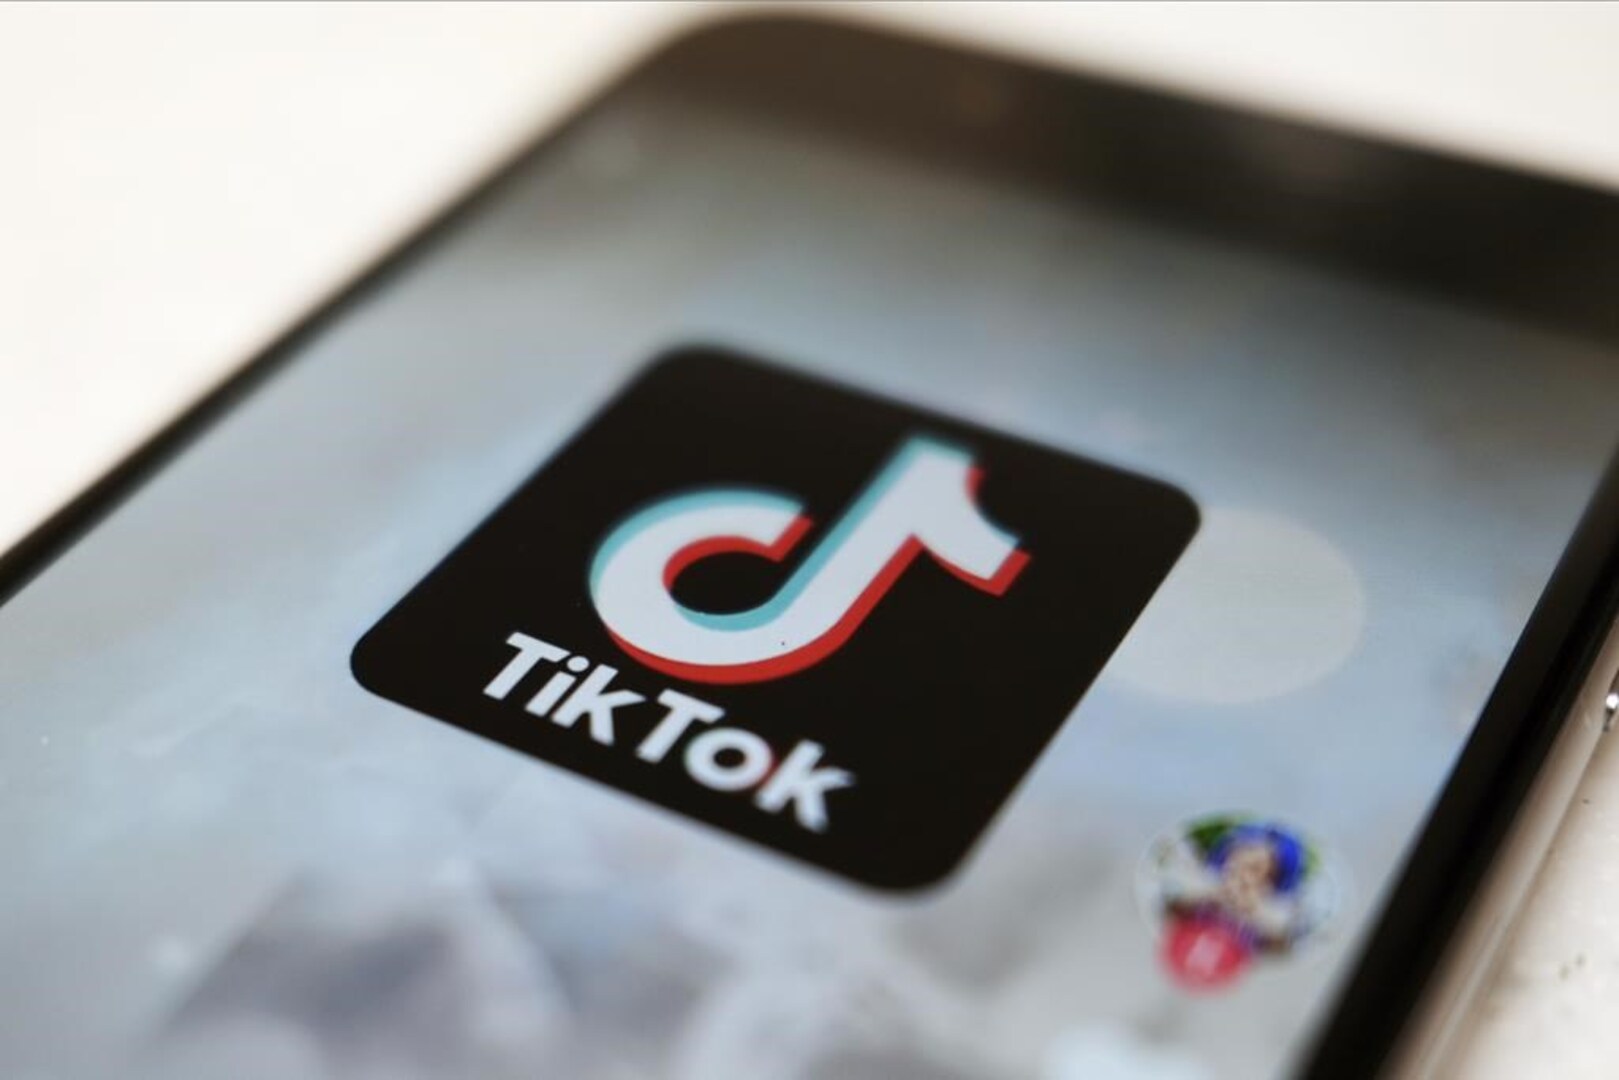 Business Report: TikTok security under investigation